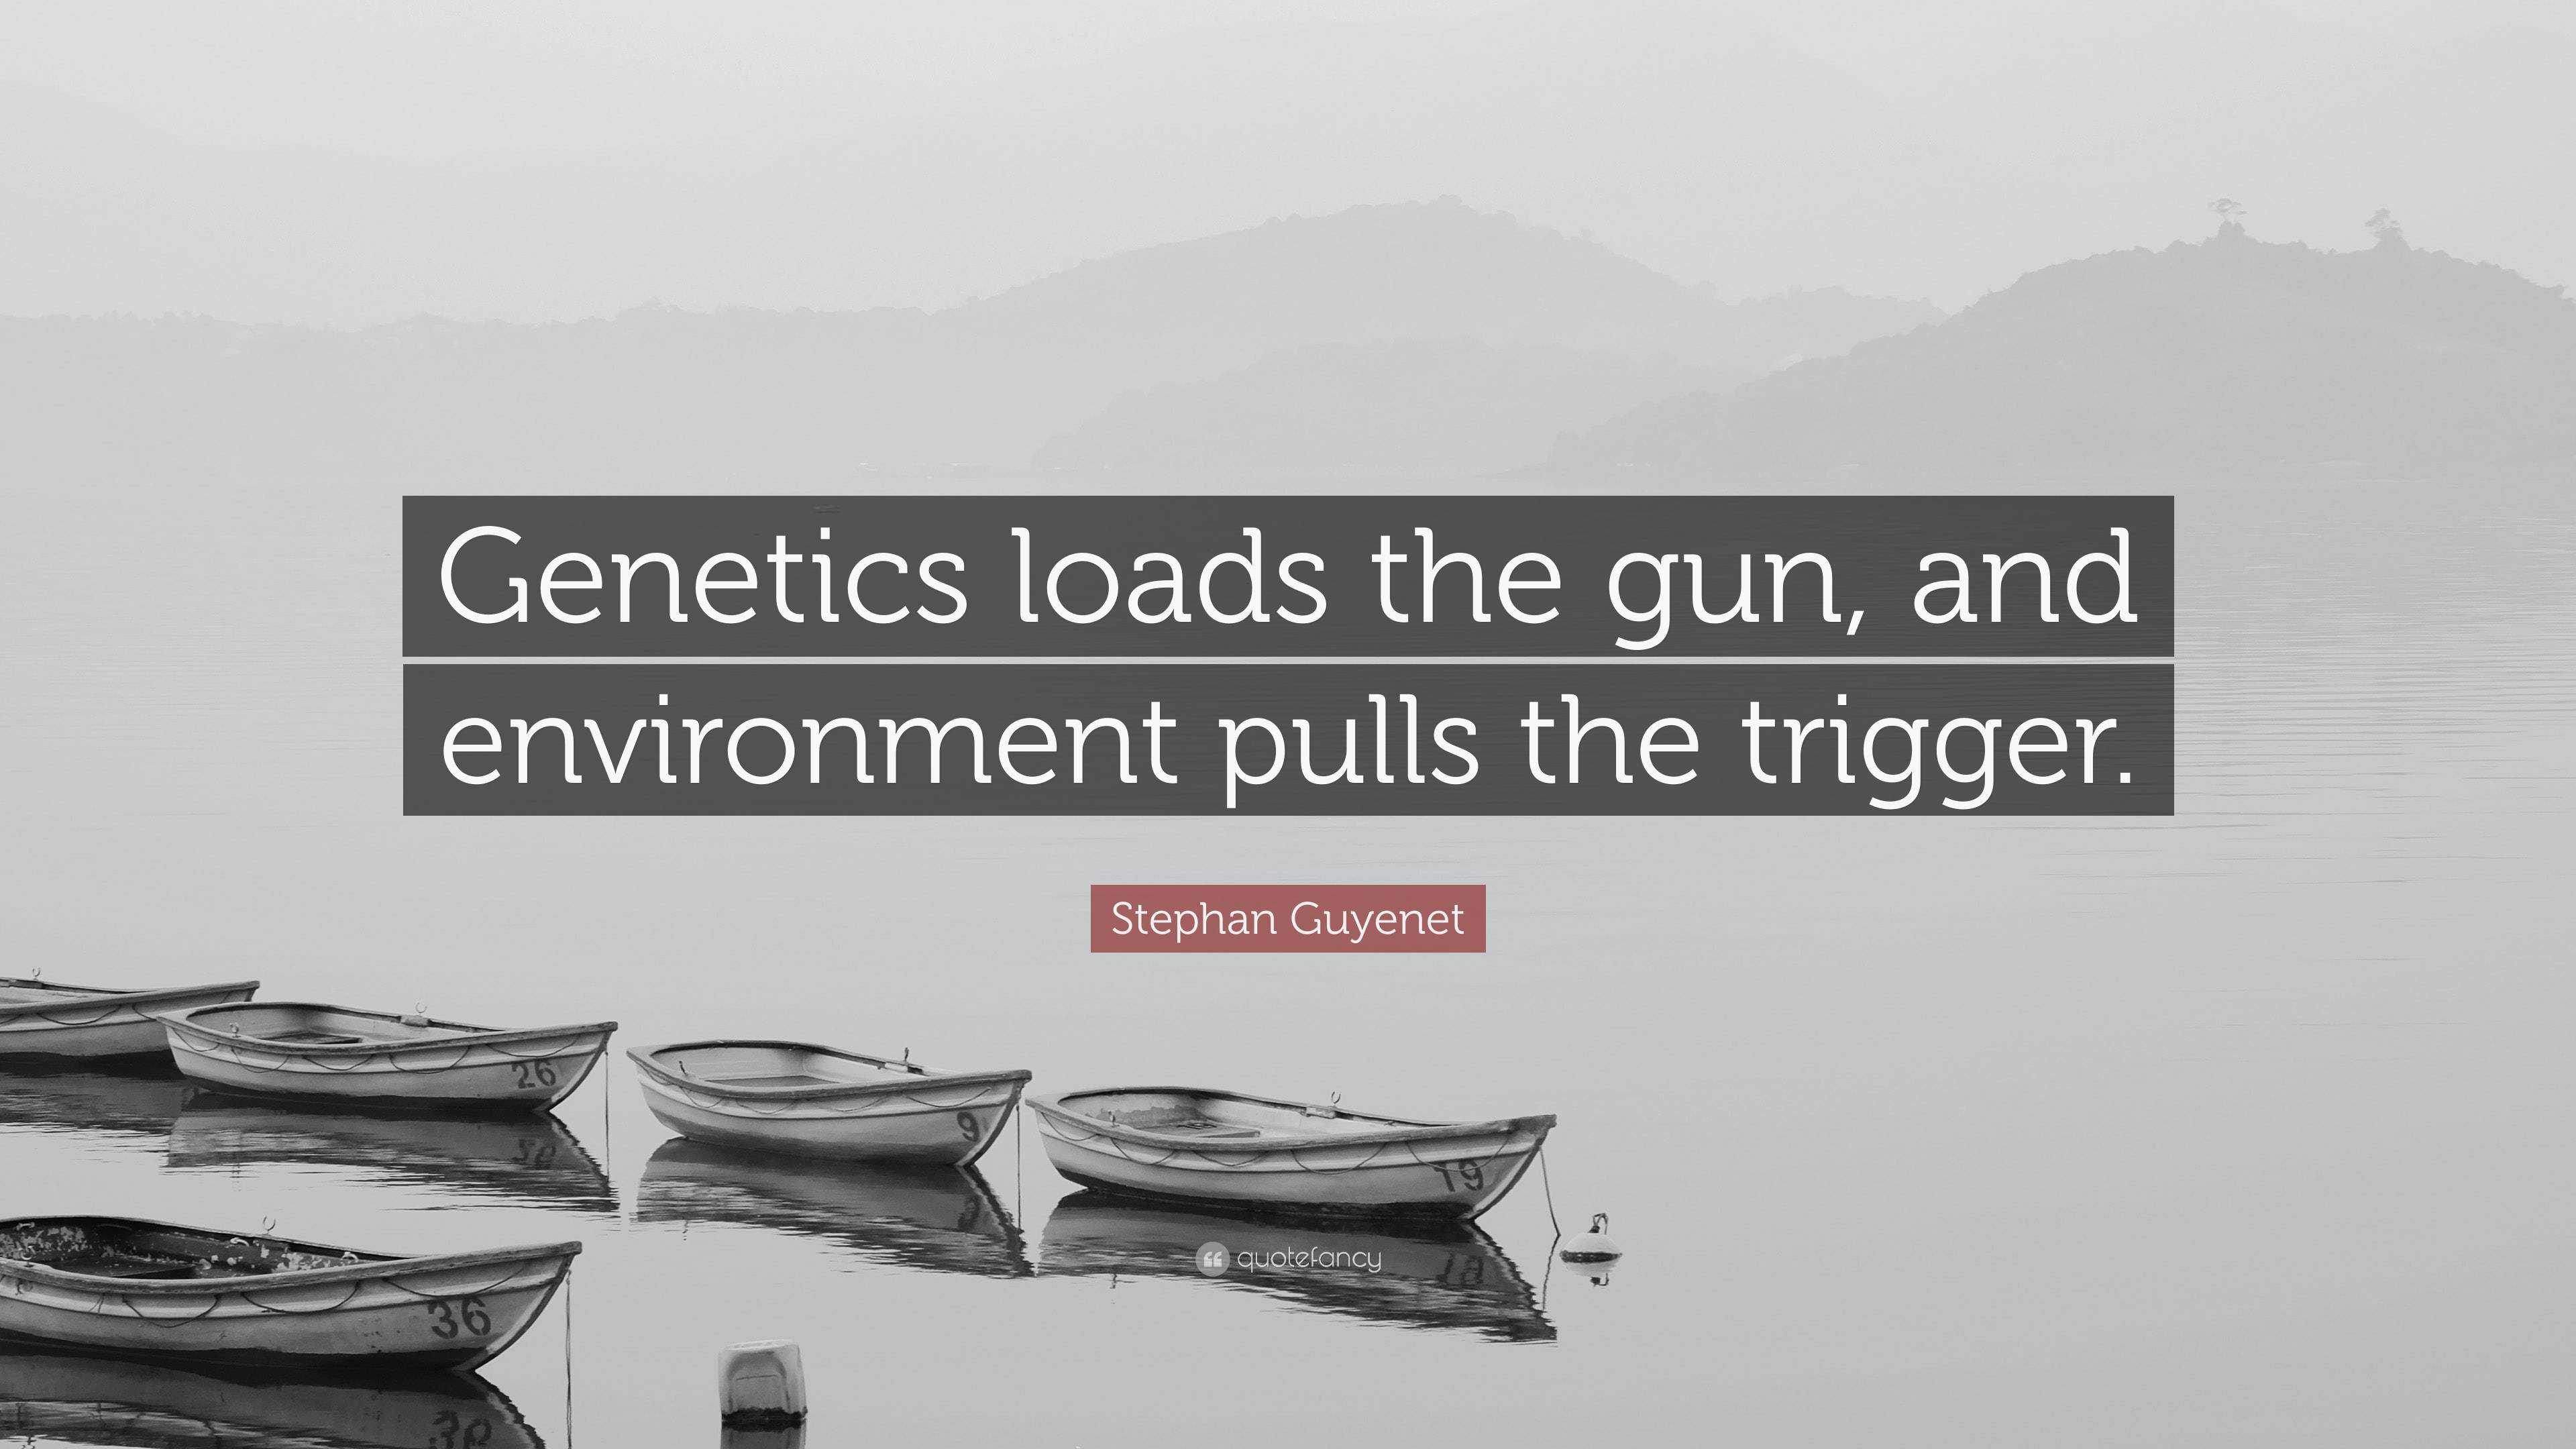 Stephan Guyenet Quote: “Genetics loads the gun, and environment pulls